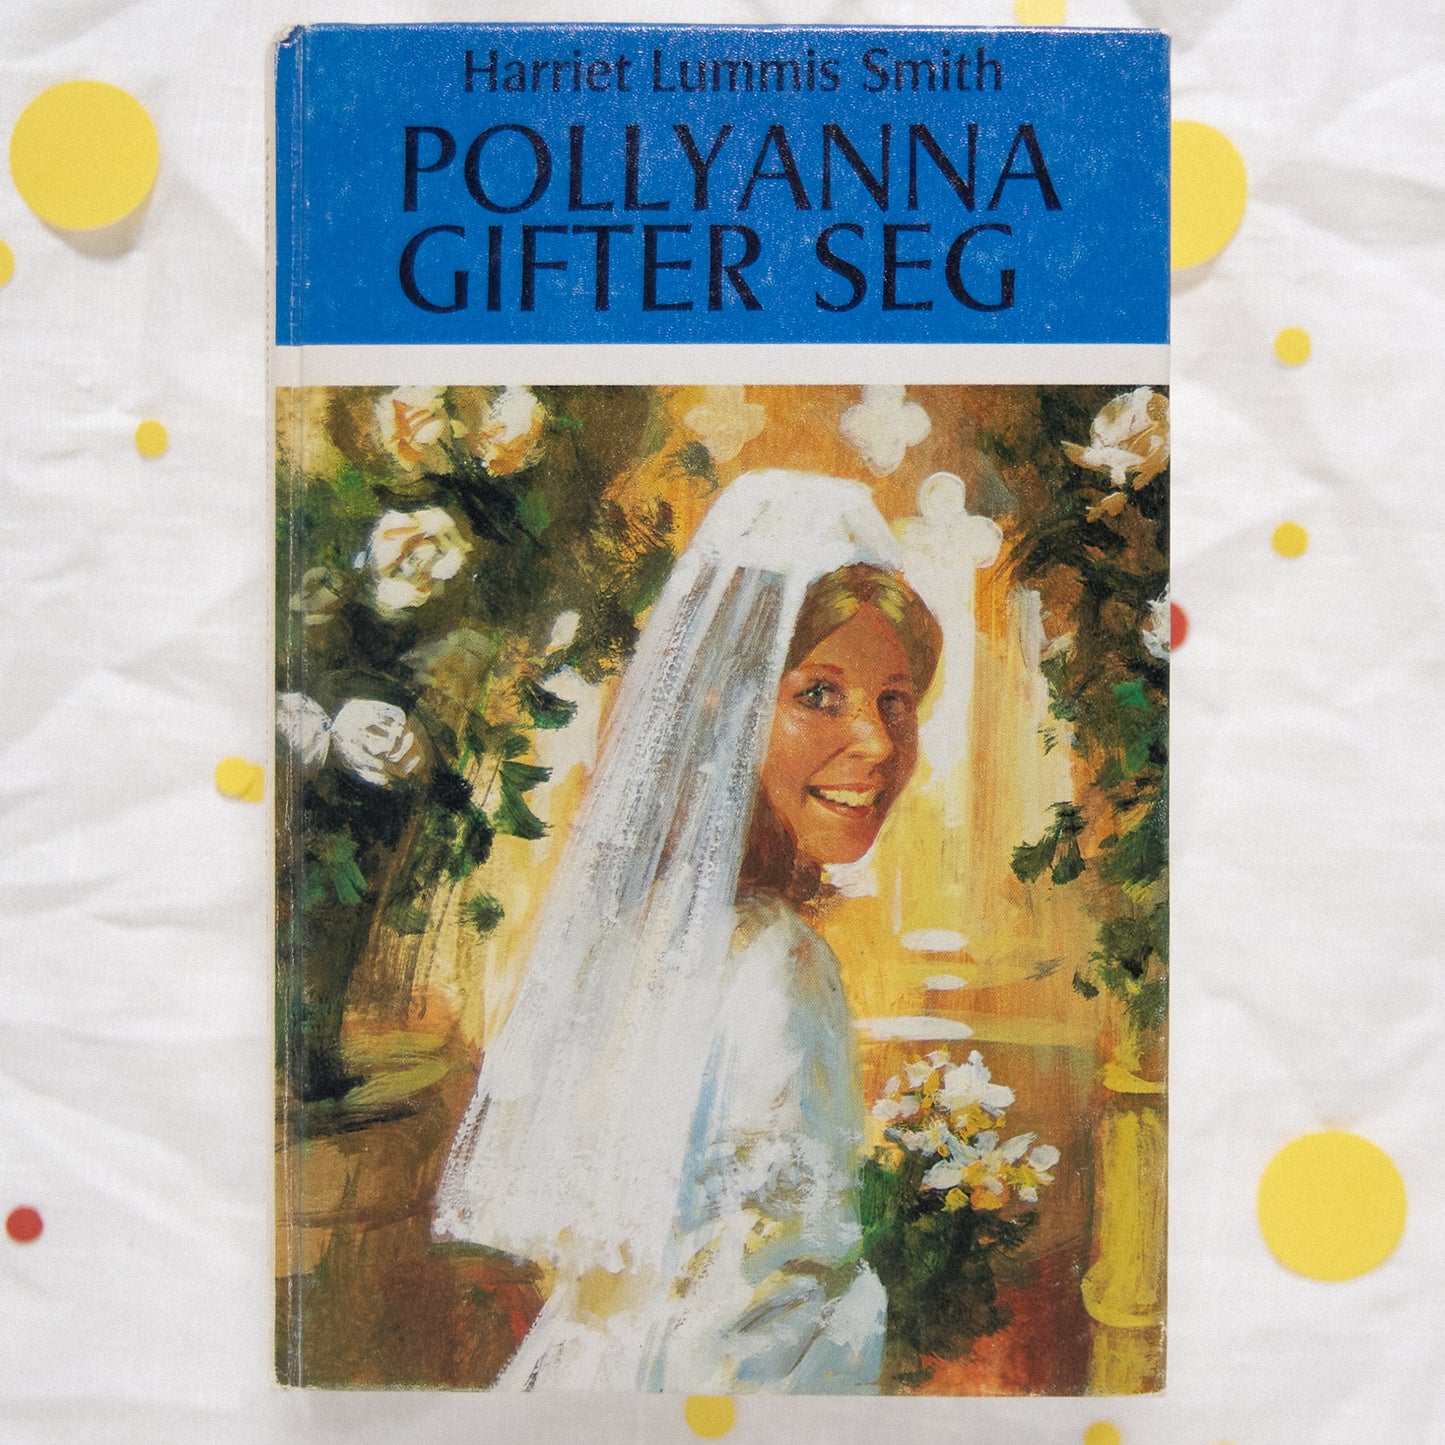 Pollyanna gifter seg (Pollyanna, #3)